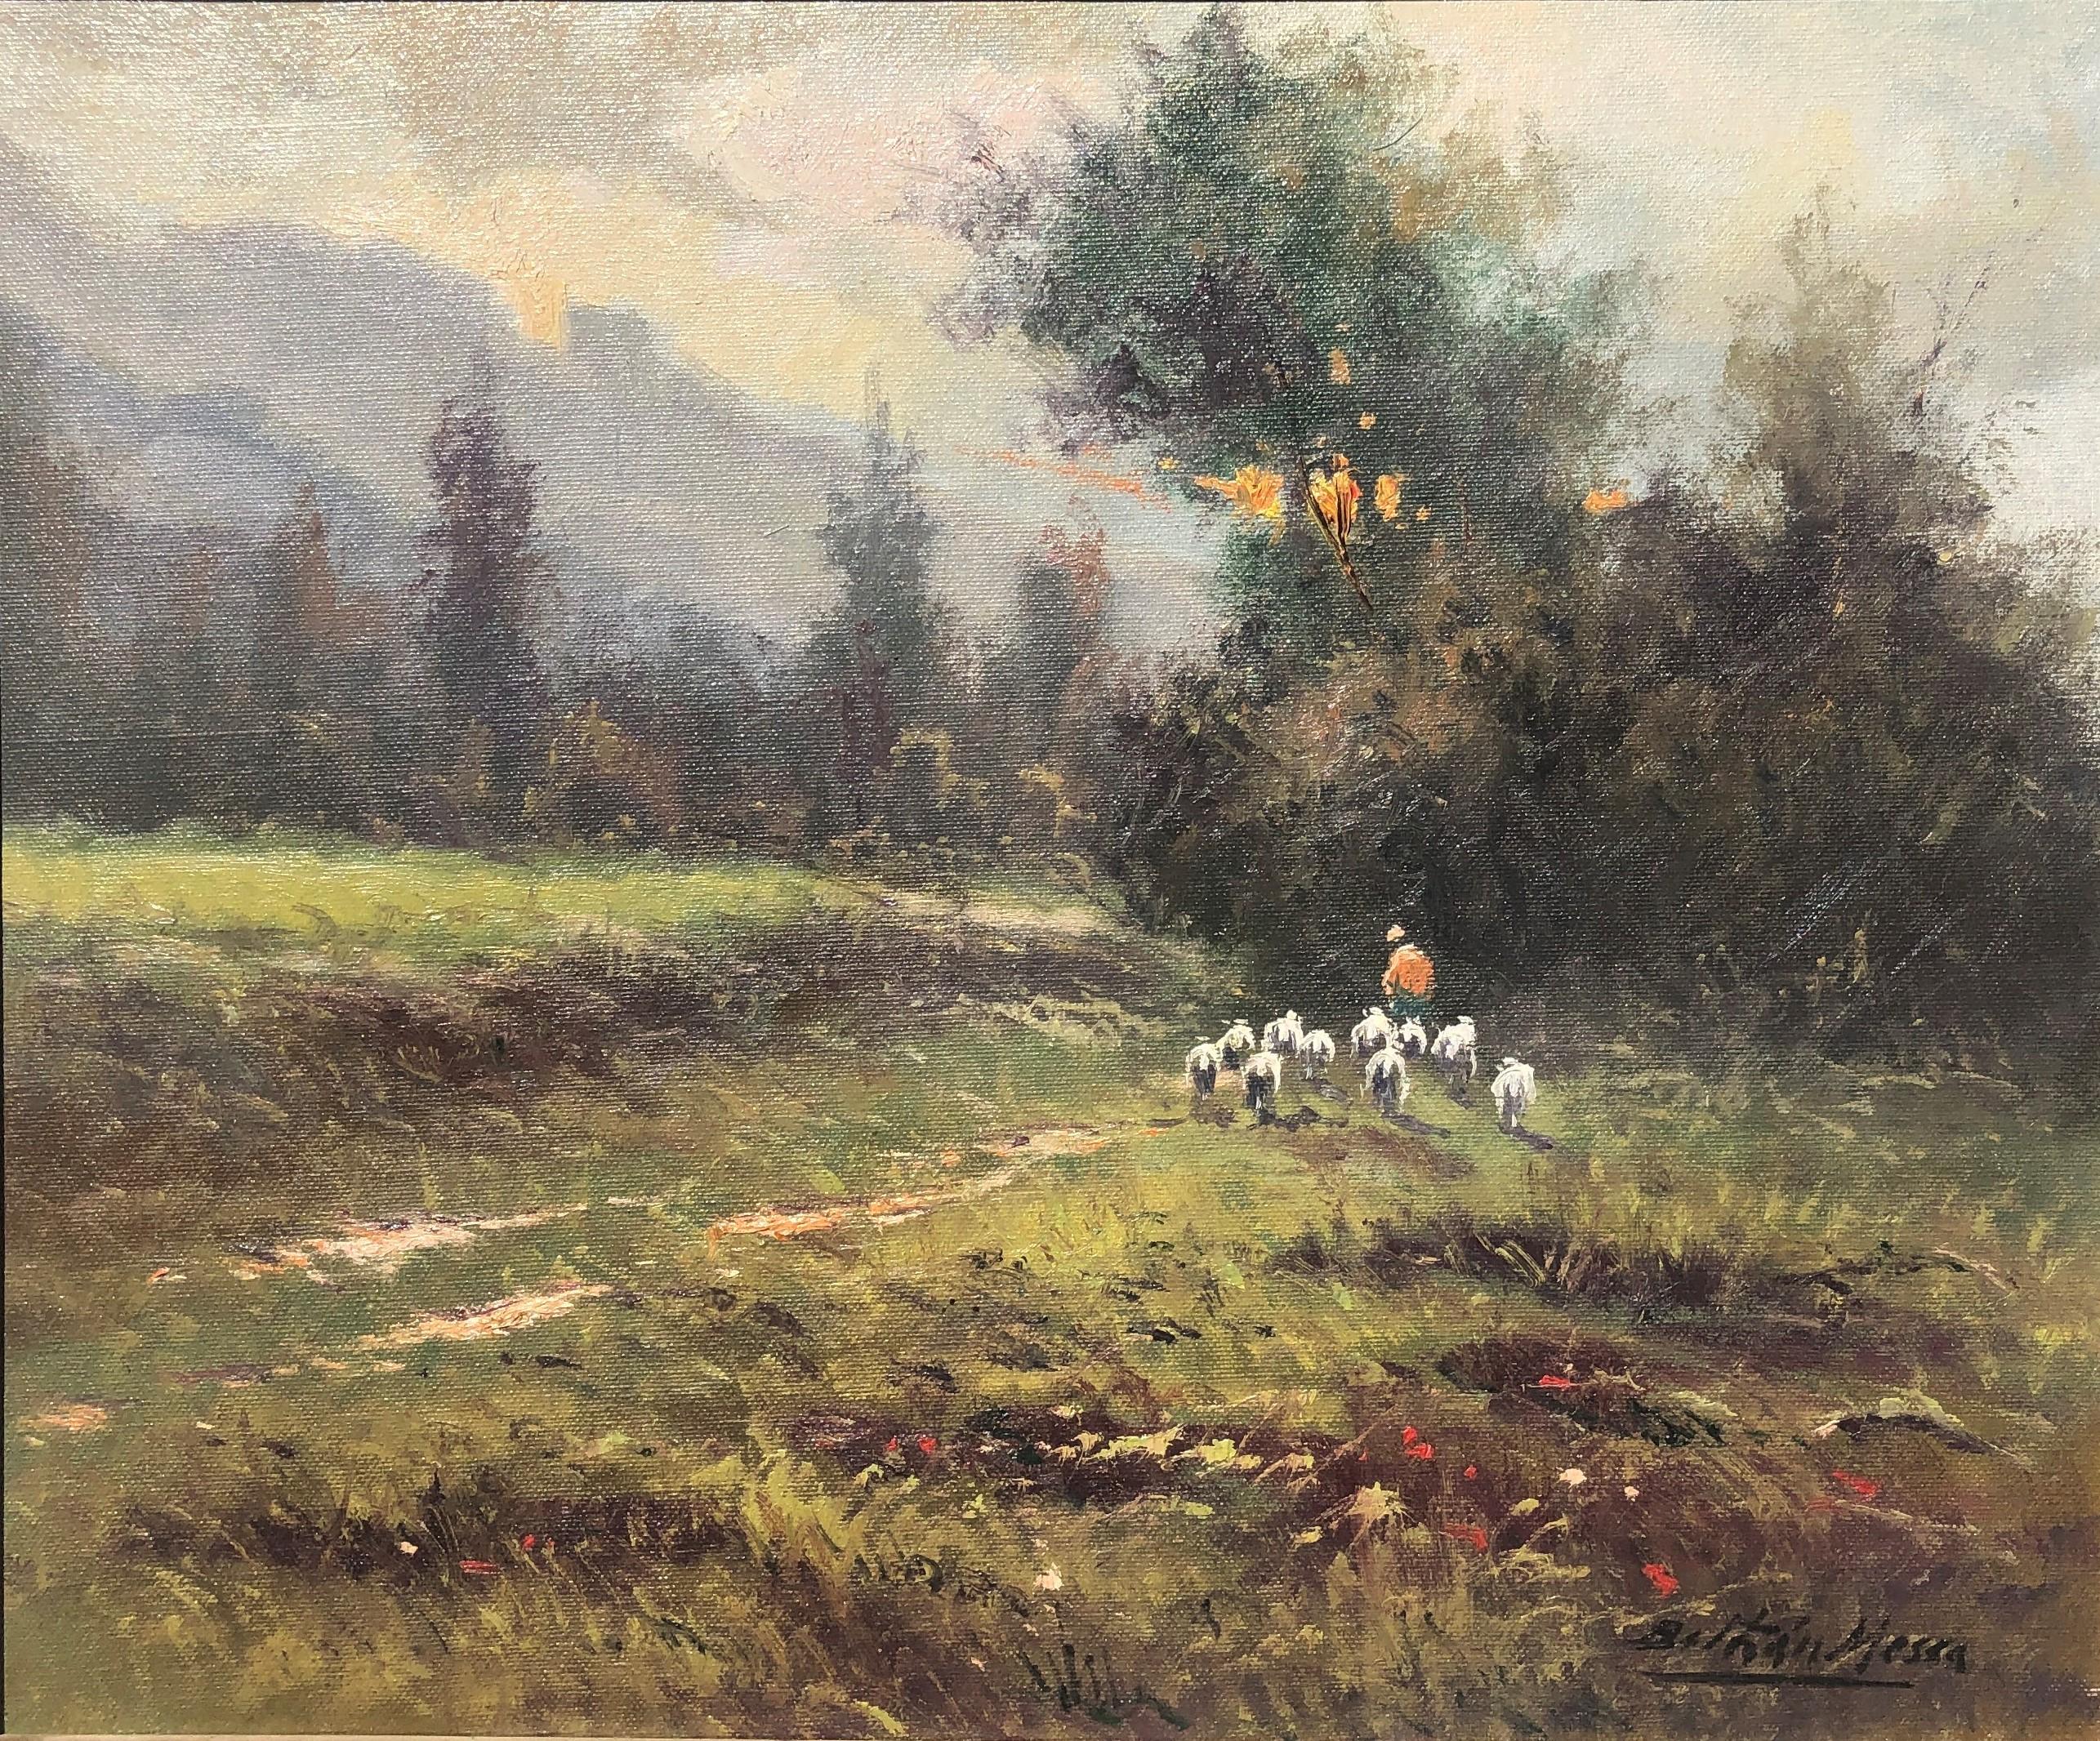 Enric Beltrán Messa Landscape Painting - Aran Valley landscape Spain oil on canvas painting